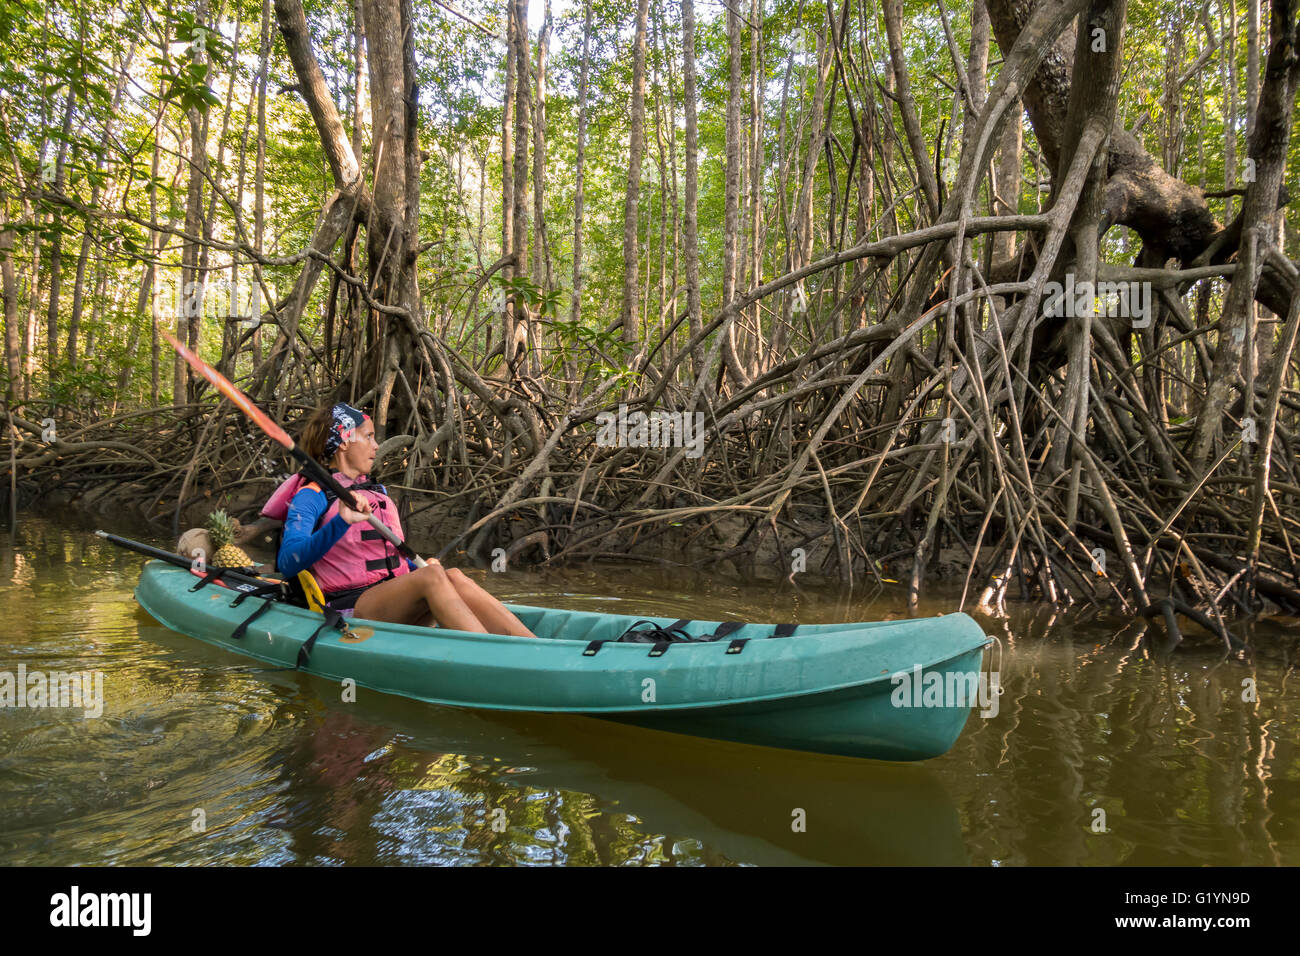 OSA PENINSULA, COSTA RICA - Woman paddles kayak in mangrove swamp. Stock Photo